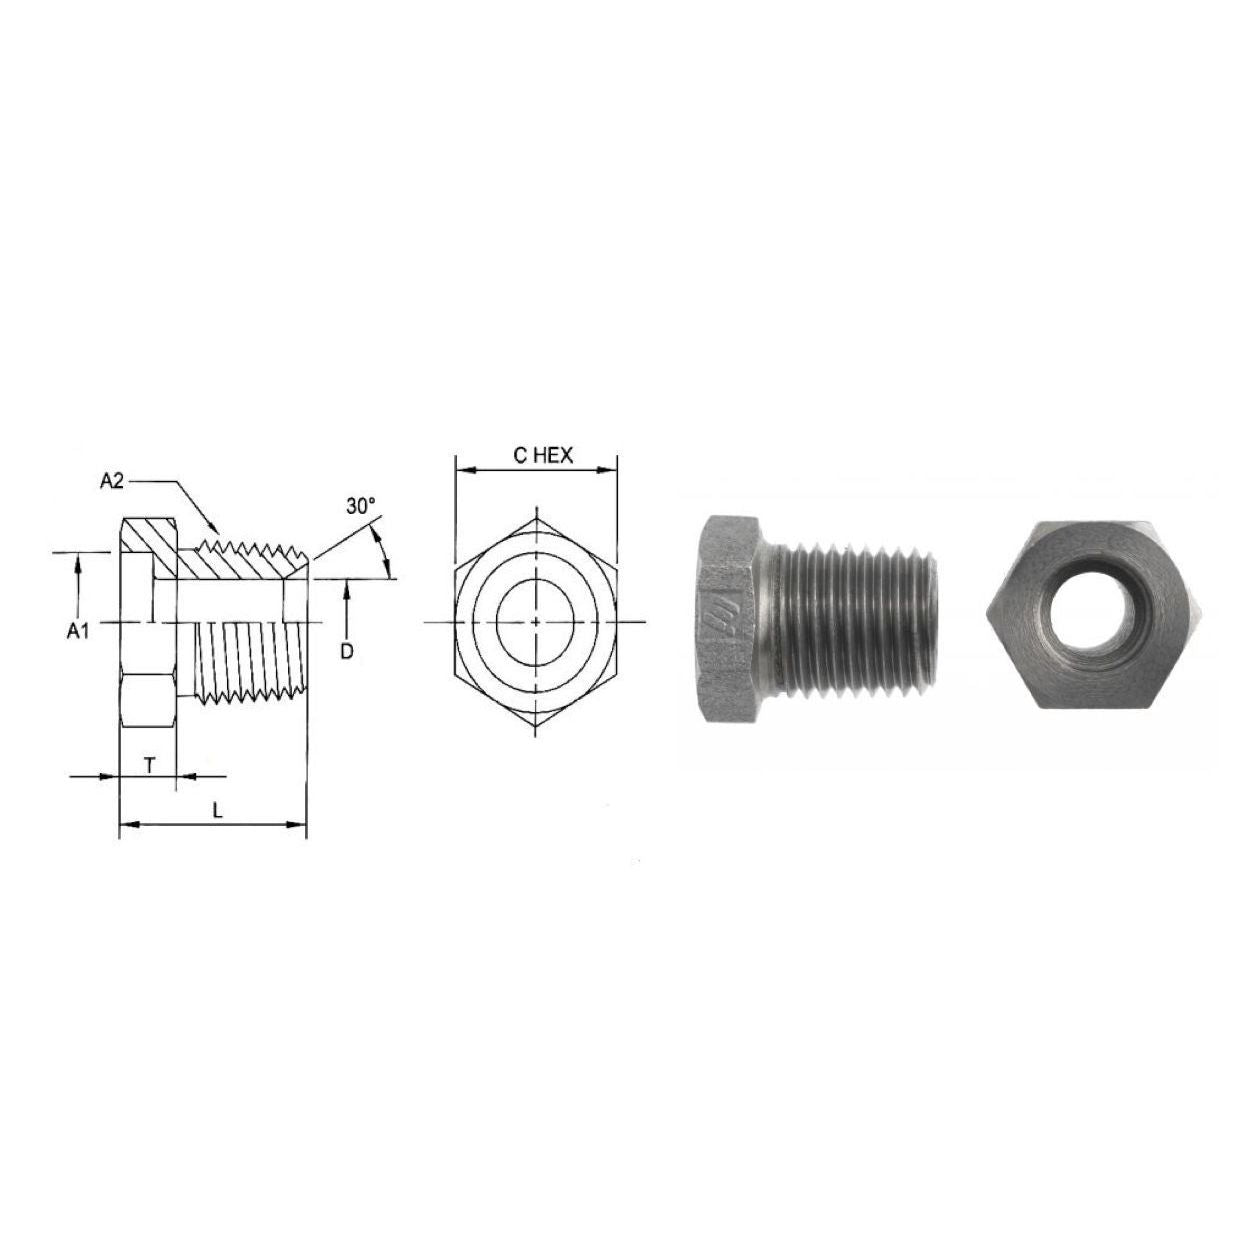 0404-04-02 : OneHydraulics 0.25 (1/4) Bore x 0.125 (1/8) Male NPT Straight Plug, Steel